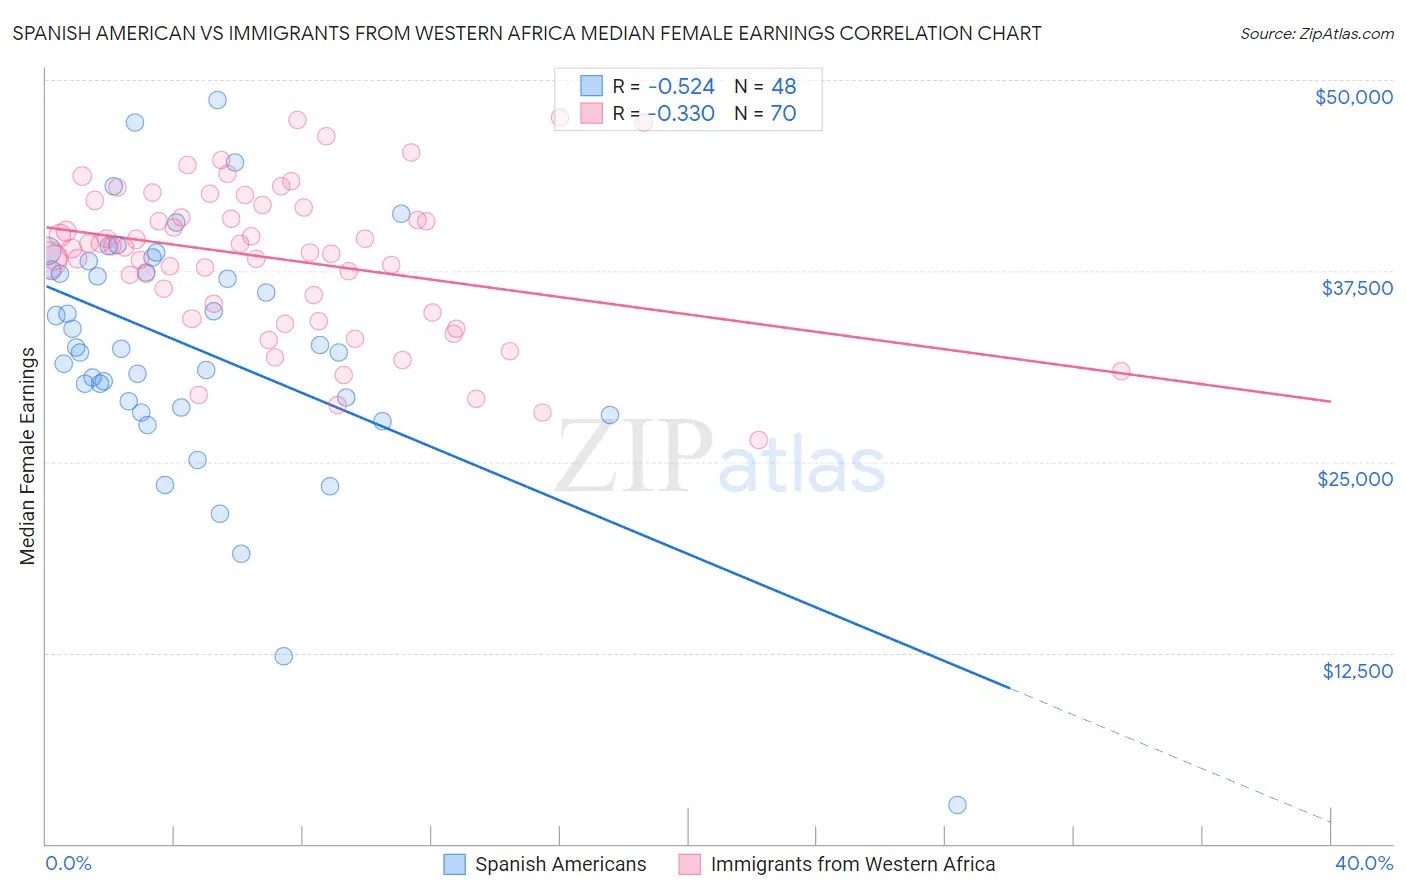 Spanish American vs Immigrants from Western Africa Median Female Earnings